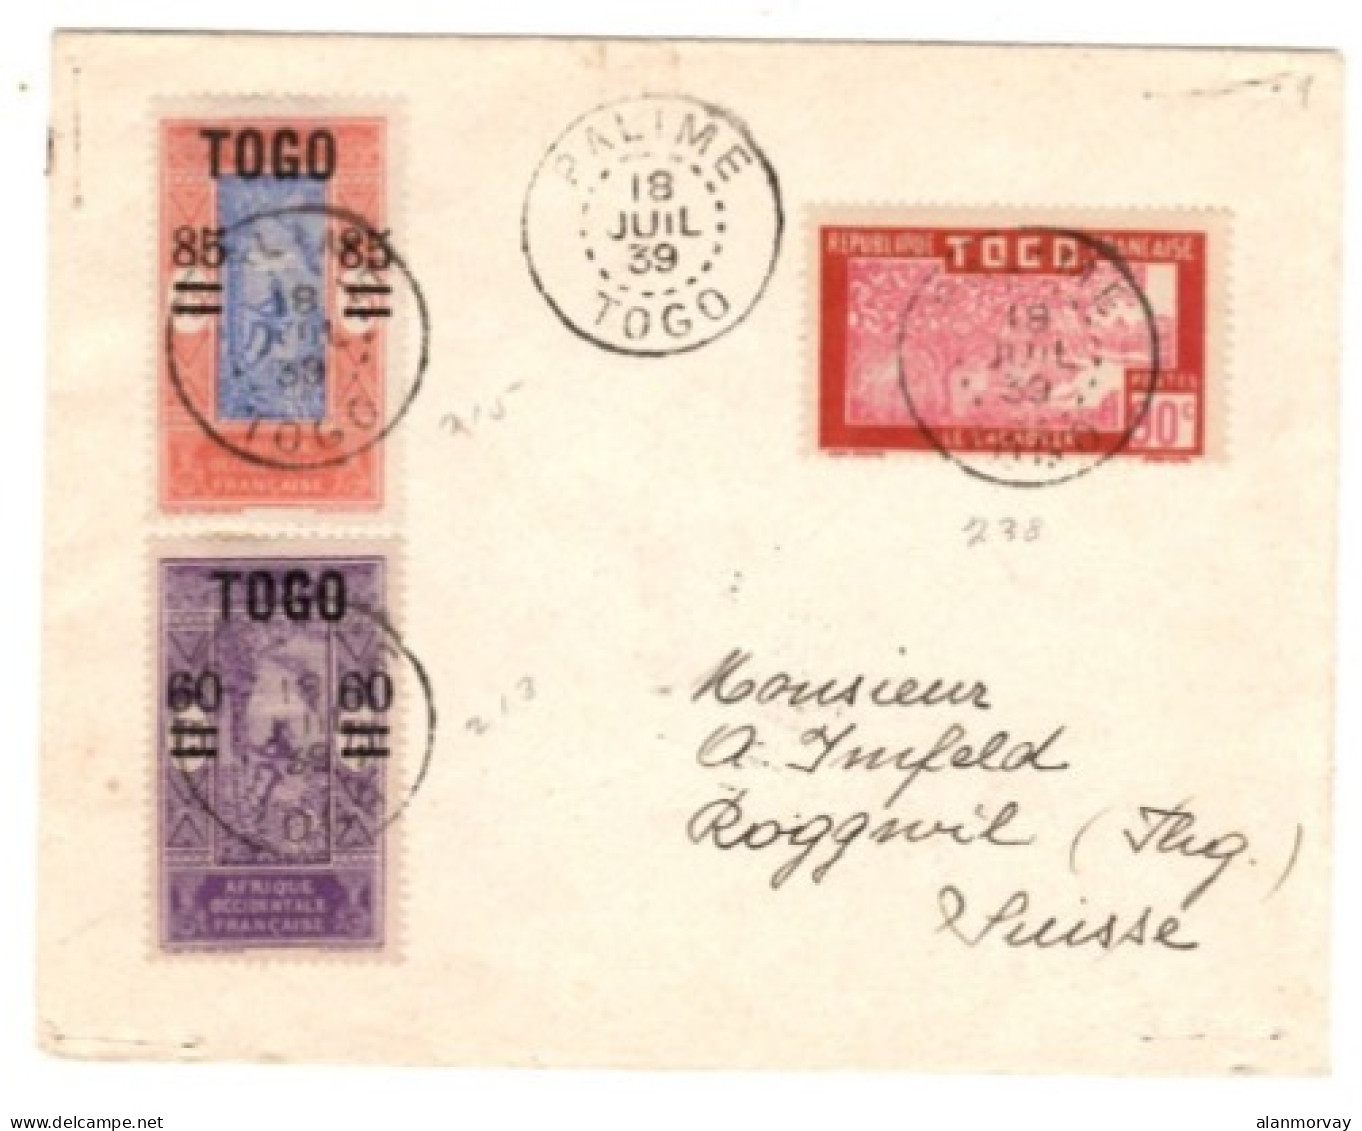 Togo - July 18, 1939 Palime Cover To Switzerland - Cartas & Documentos